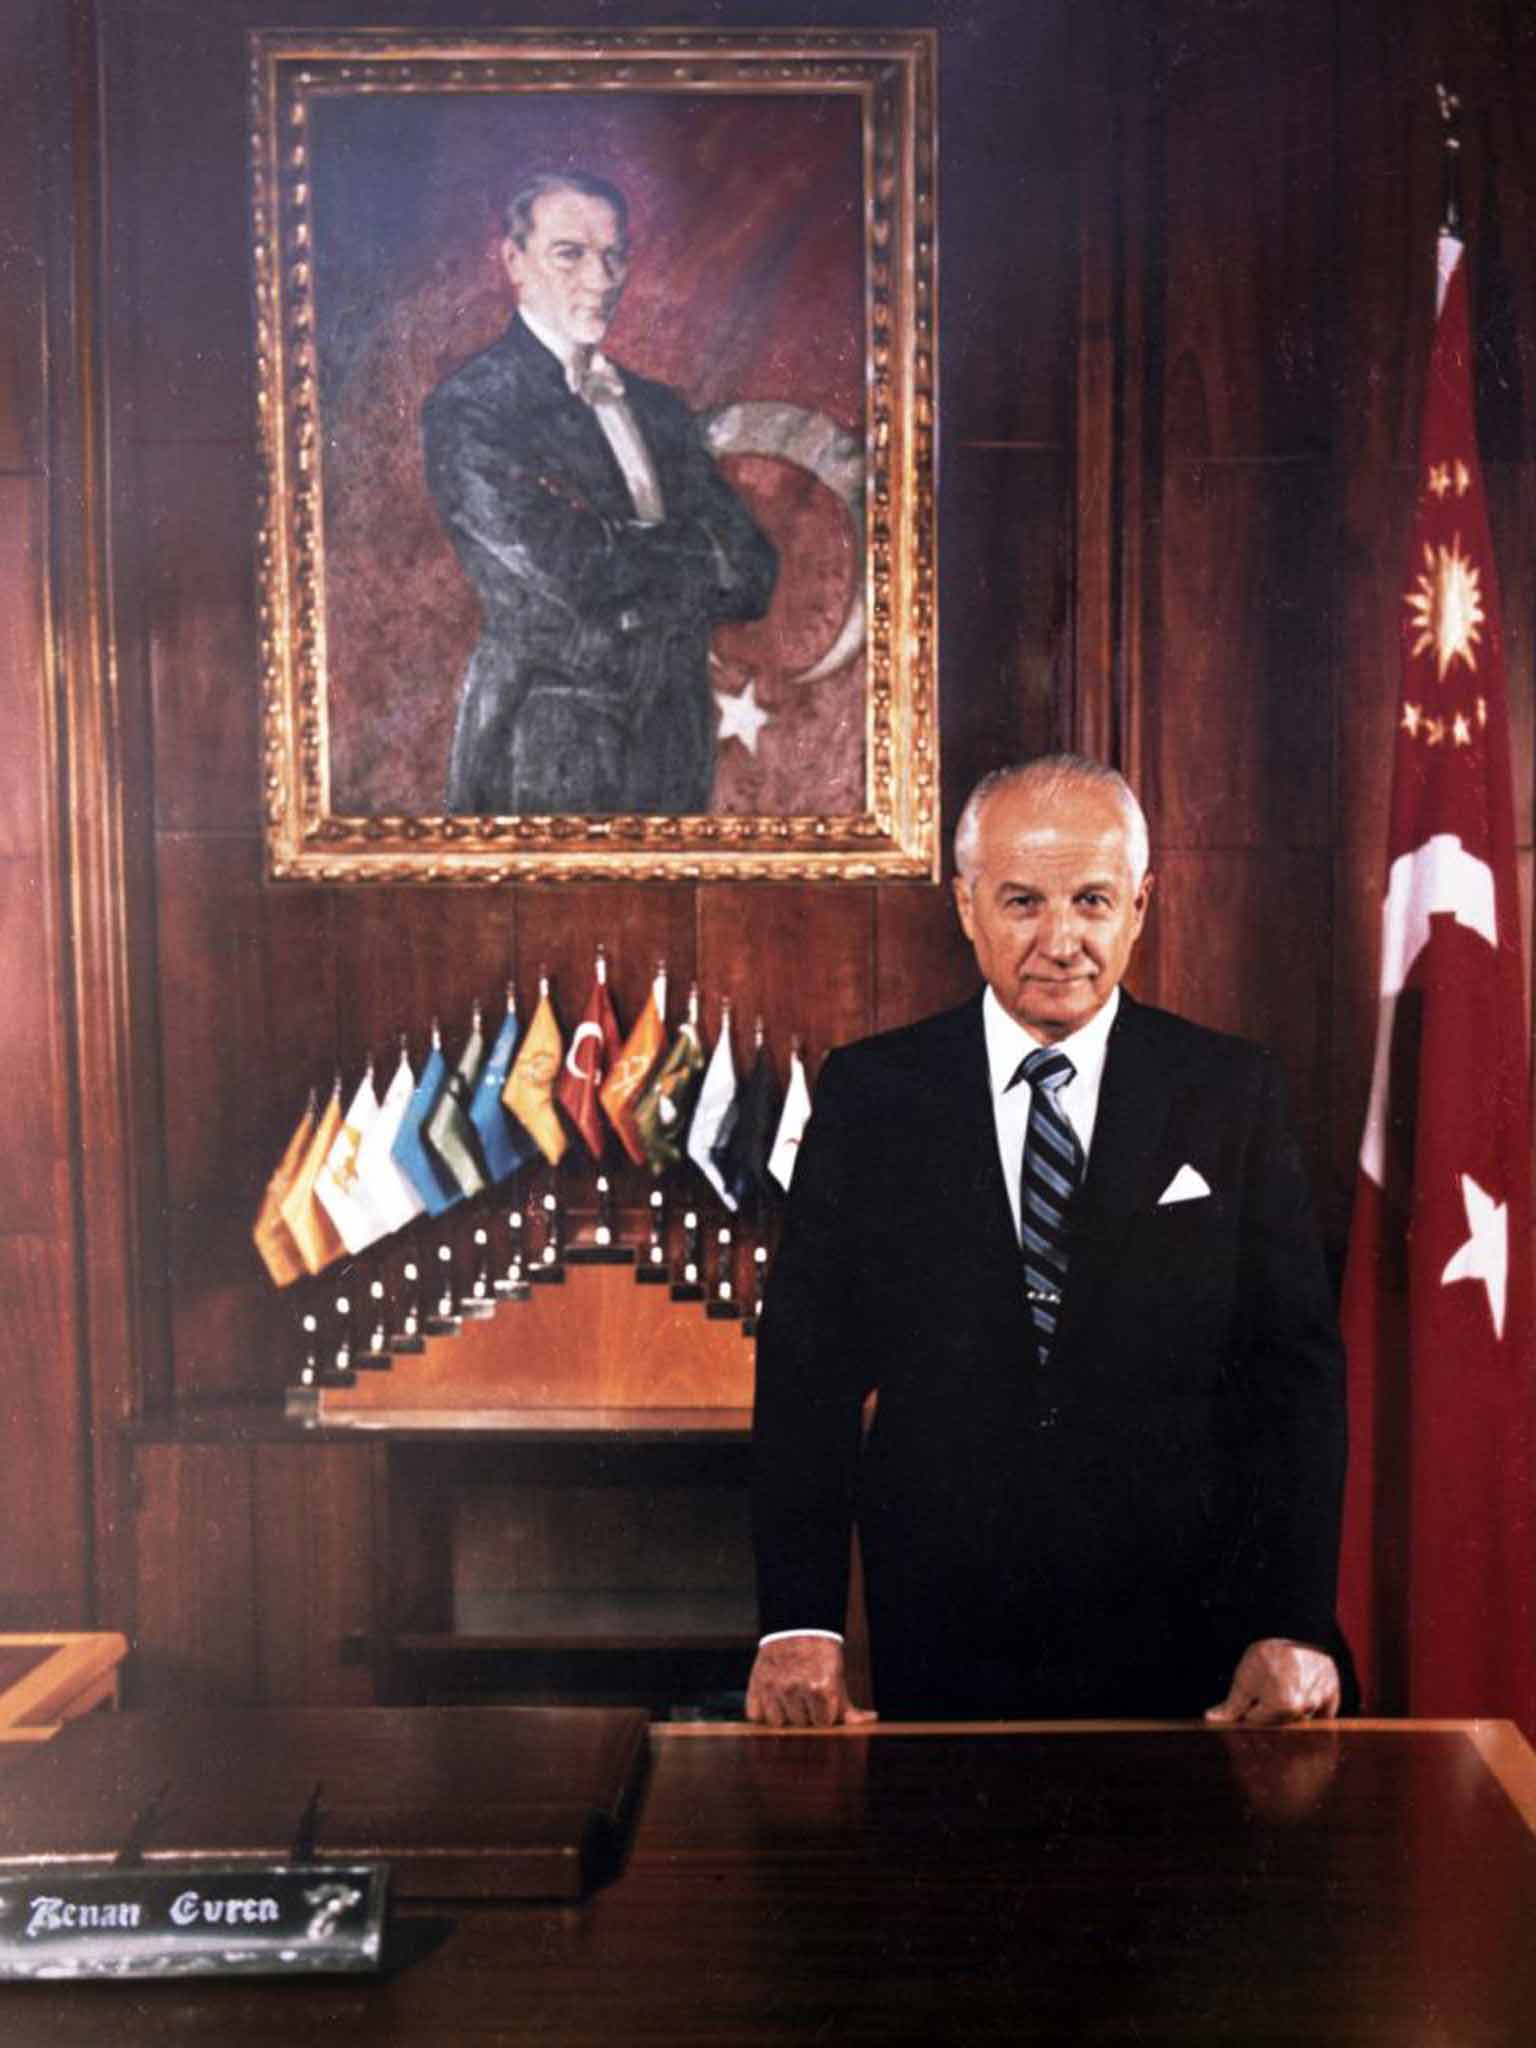 Evren in 1982: 'A whole generation was destroyed,' said one victim of his regime. 'Turkey's future was darkened.'